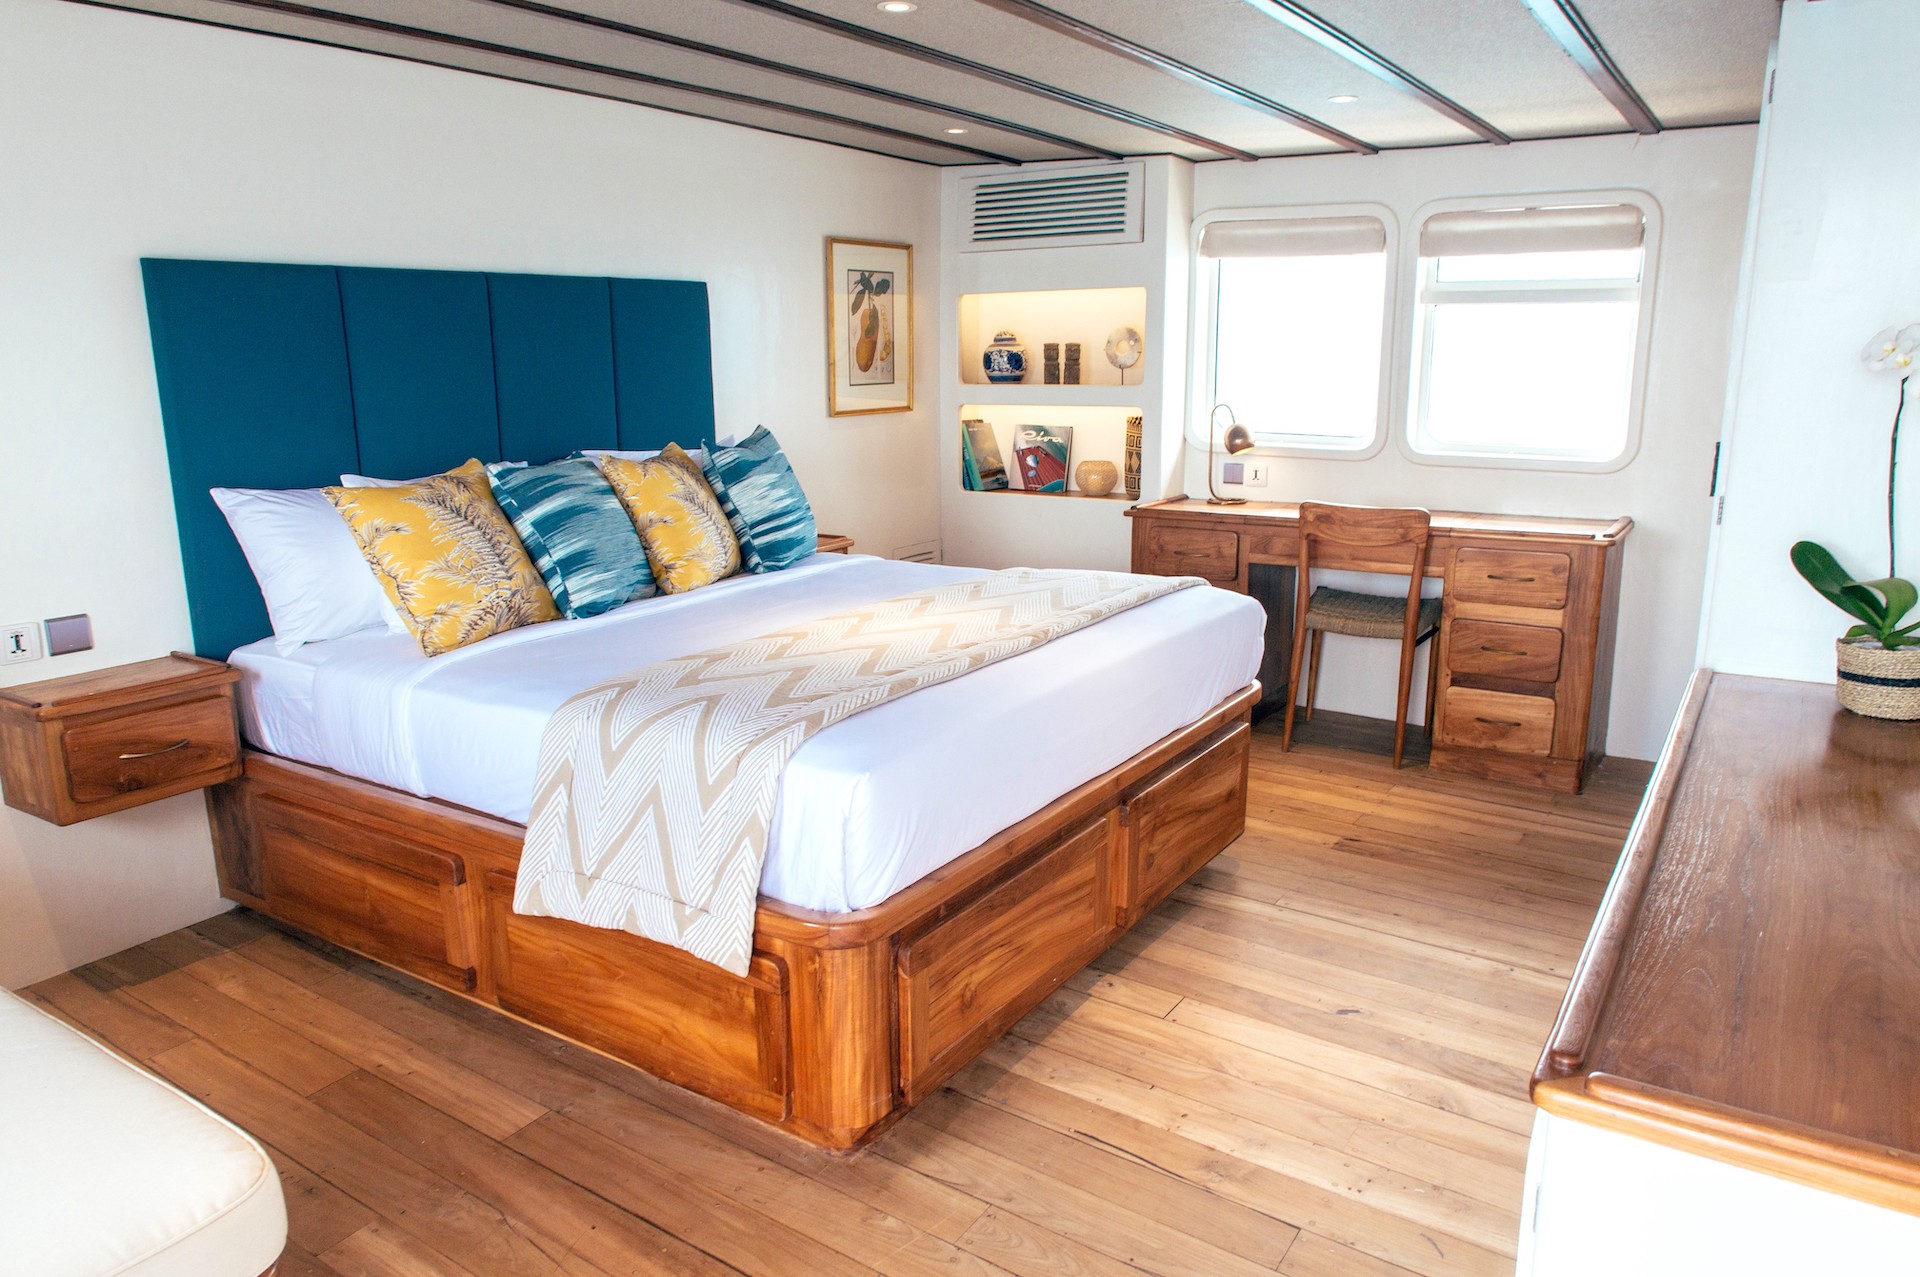 yacht charter Rascal guest cabin